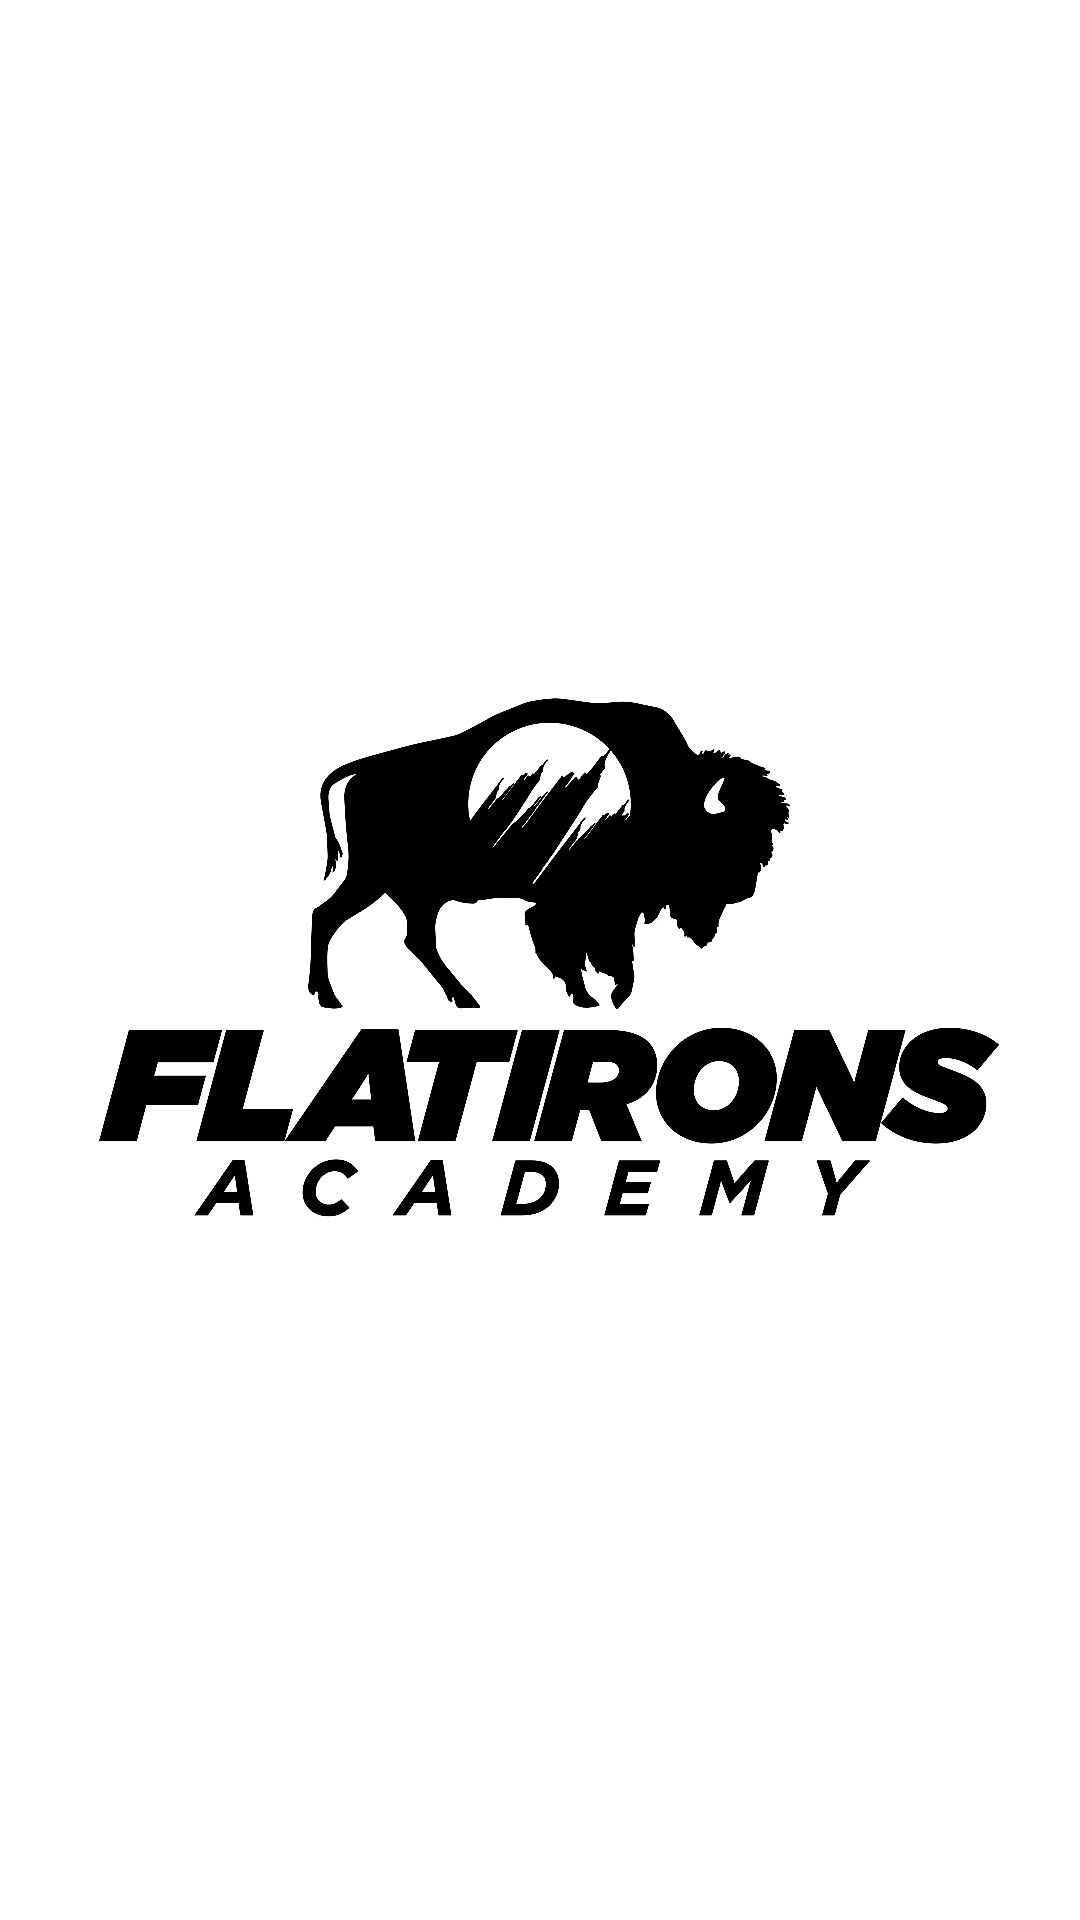 Flatirons Academy